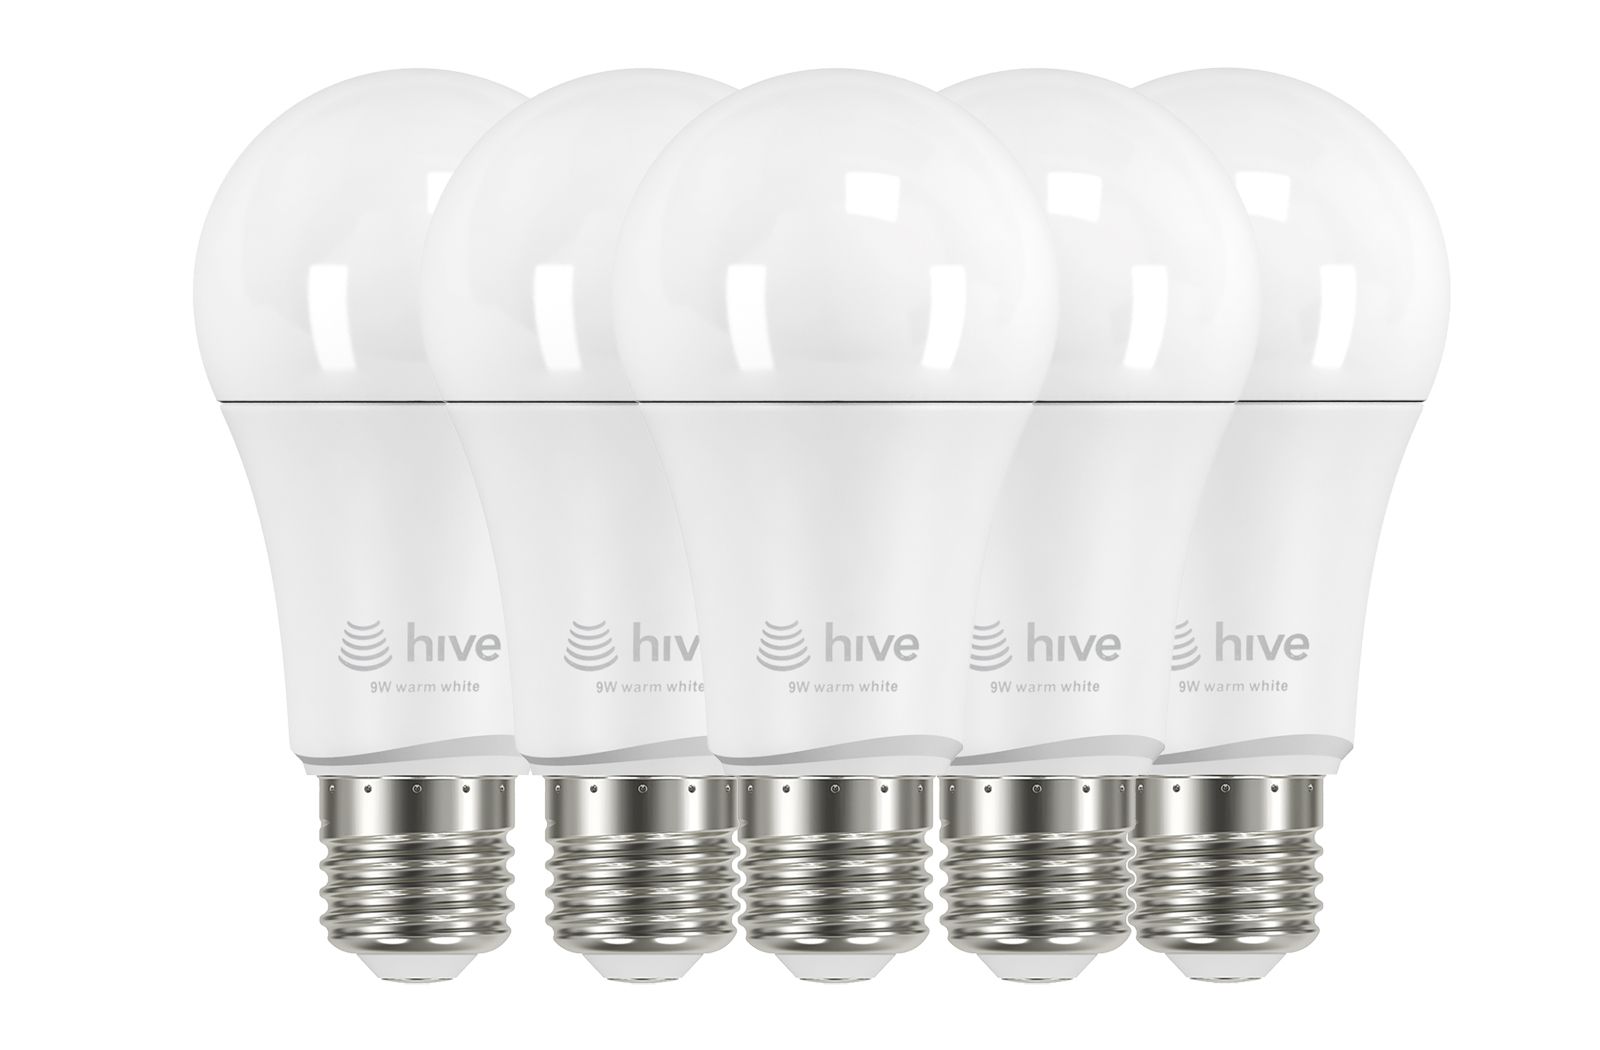 hive active light connected bulbs make hive a major smarthome player image 1